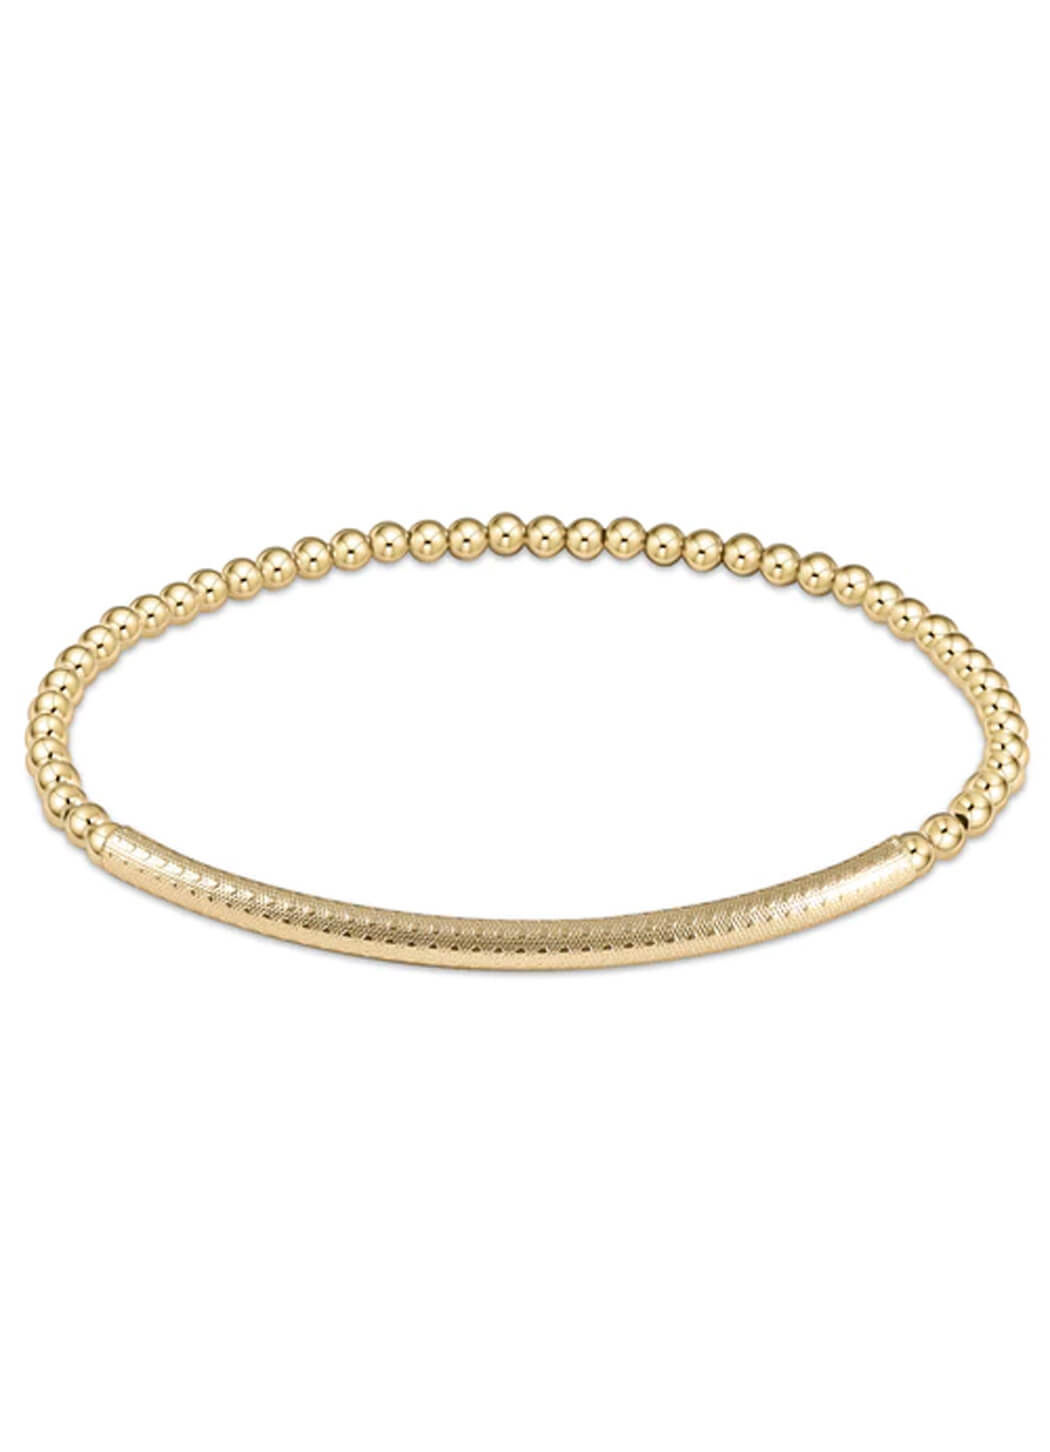 Enewton Classic Gold 3mm Bead Bracelet - Bliss Bar Textured